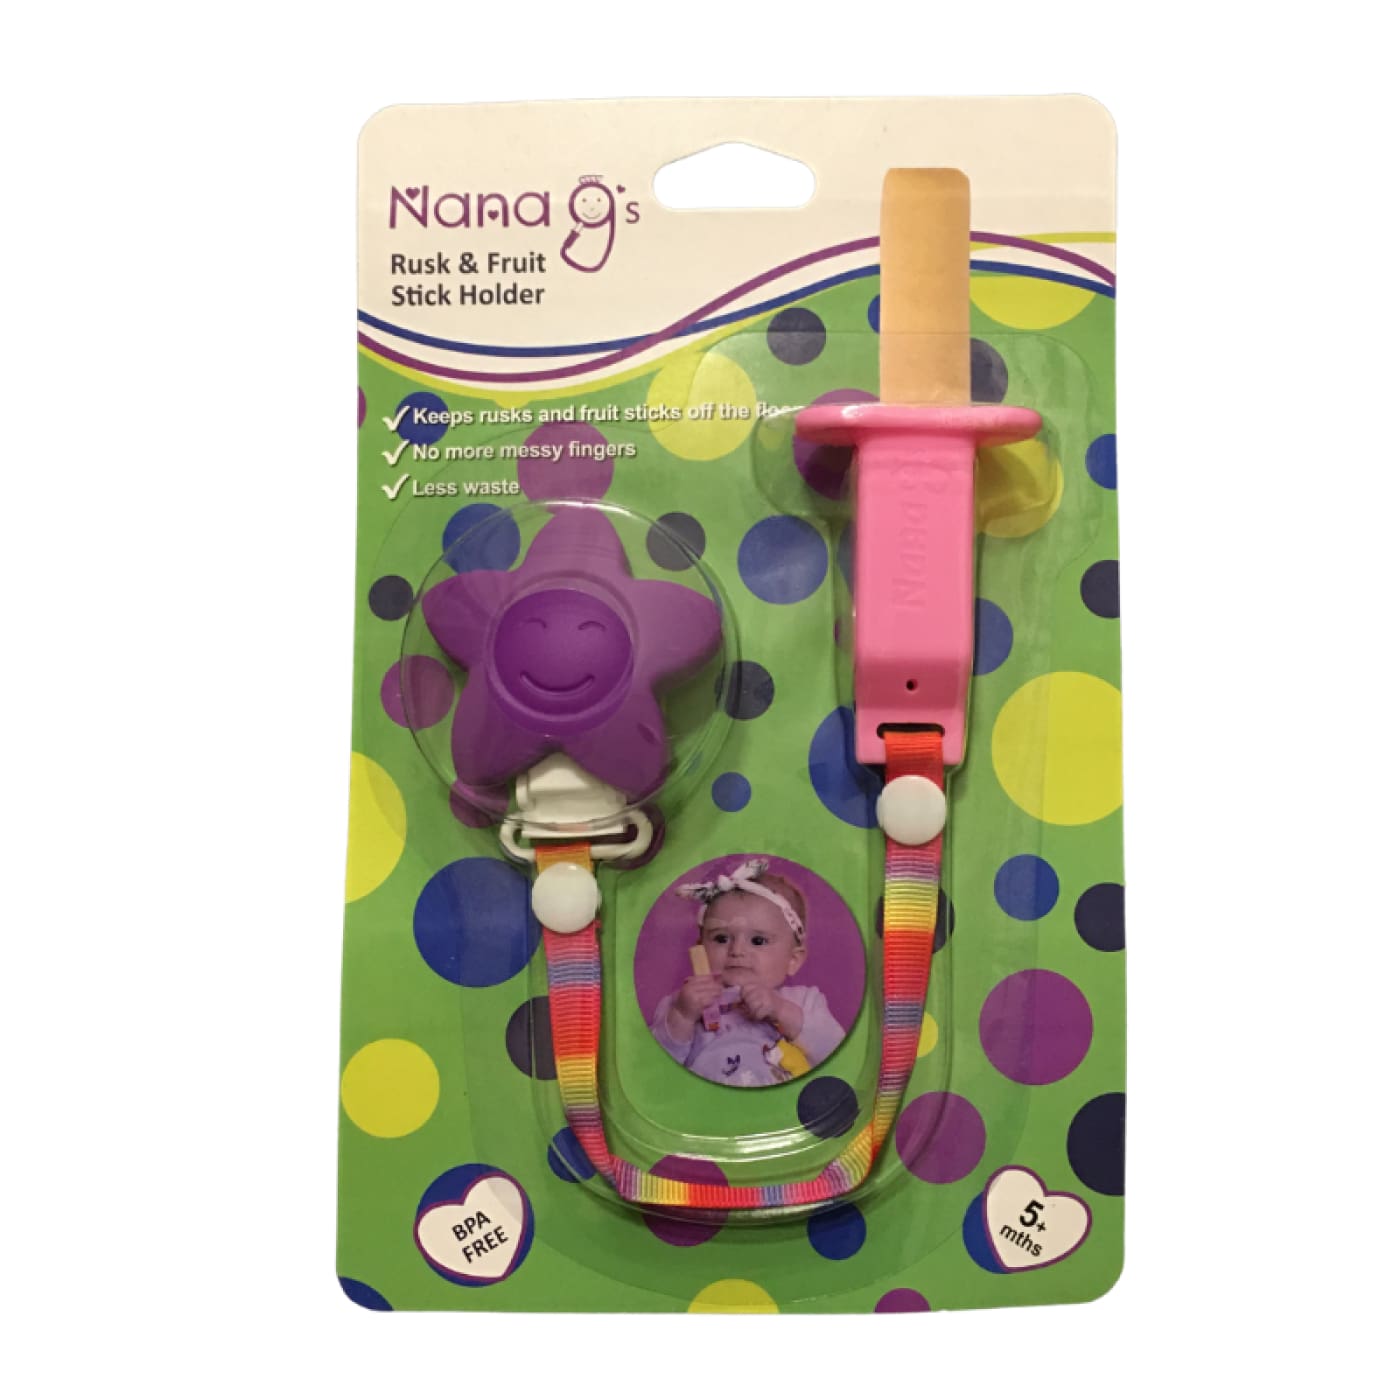 Nana gs Rusk & Fruit Stick Holder - Pink/Purple - pink/purple - NURSING & FEEDING - CONTAINERS/FEEDERS